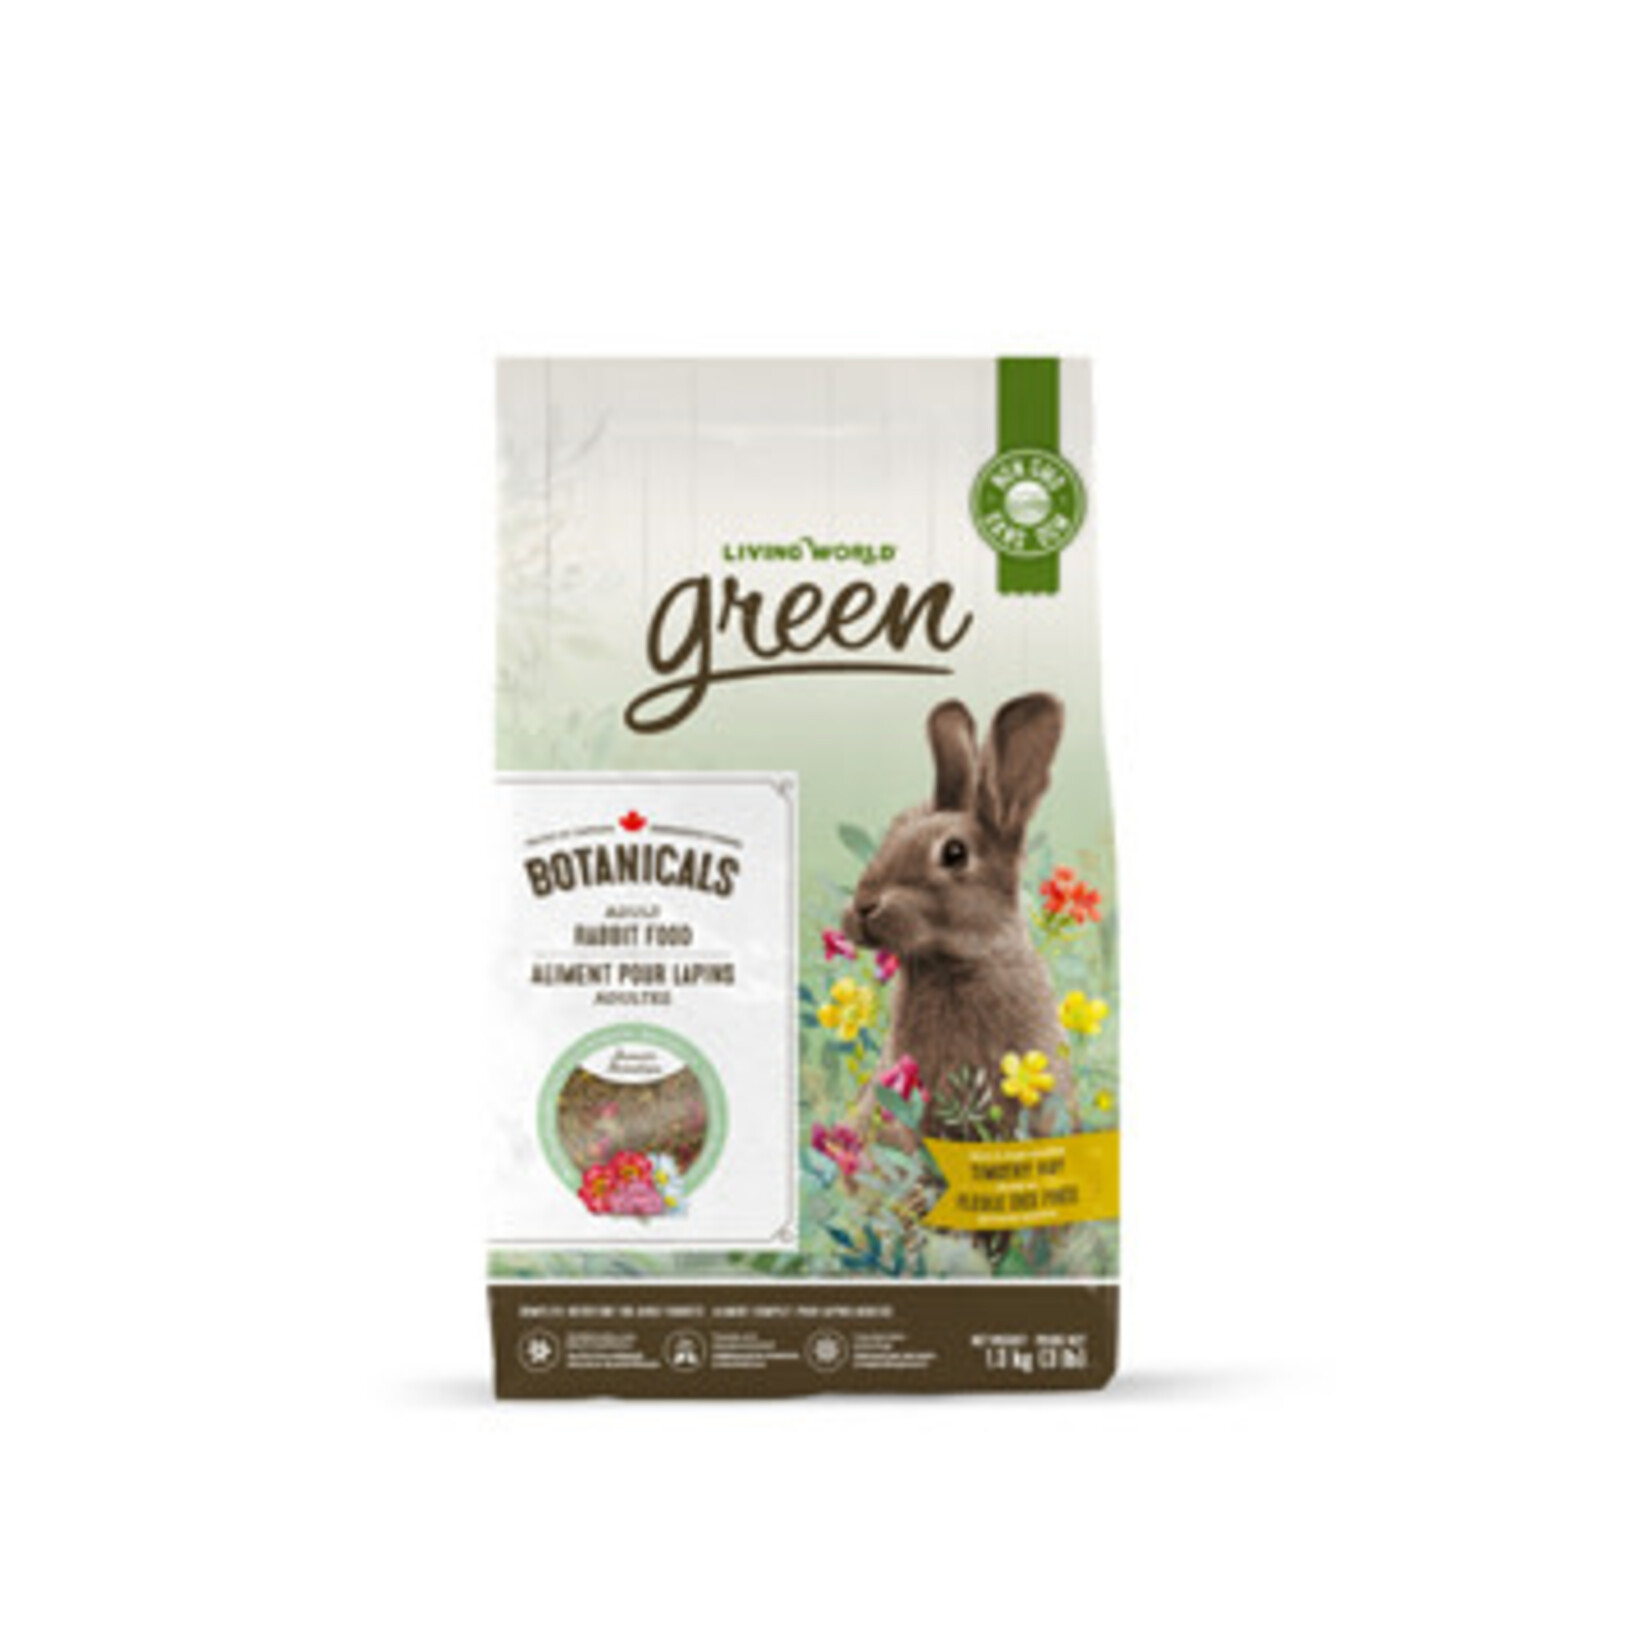 LIVING WORLD Living World Green Botanicals Adult Rabbit Food - 1.36 kg (3 lbs)